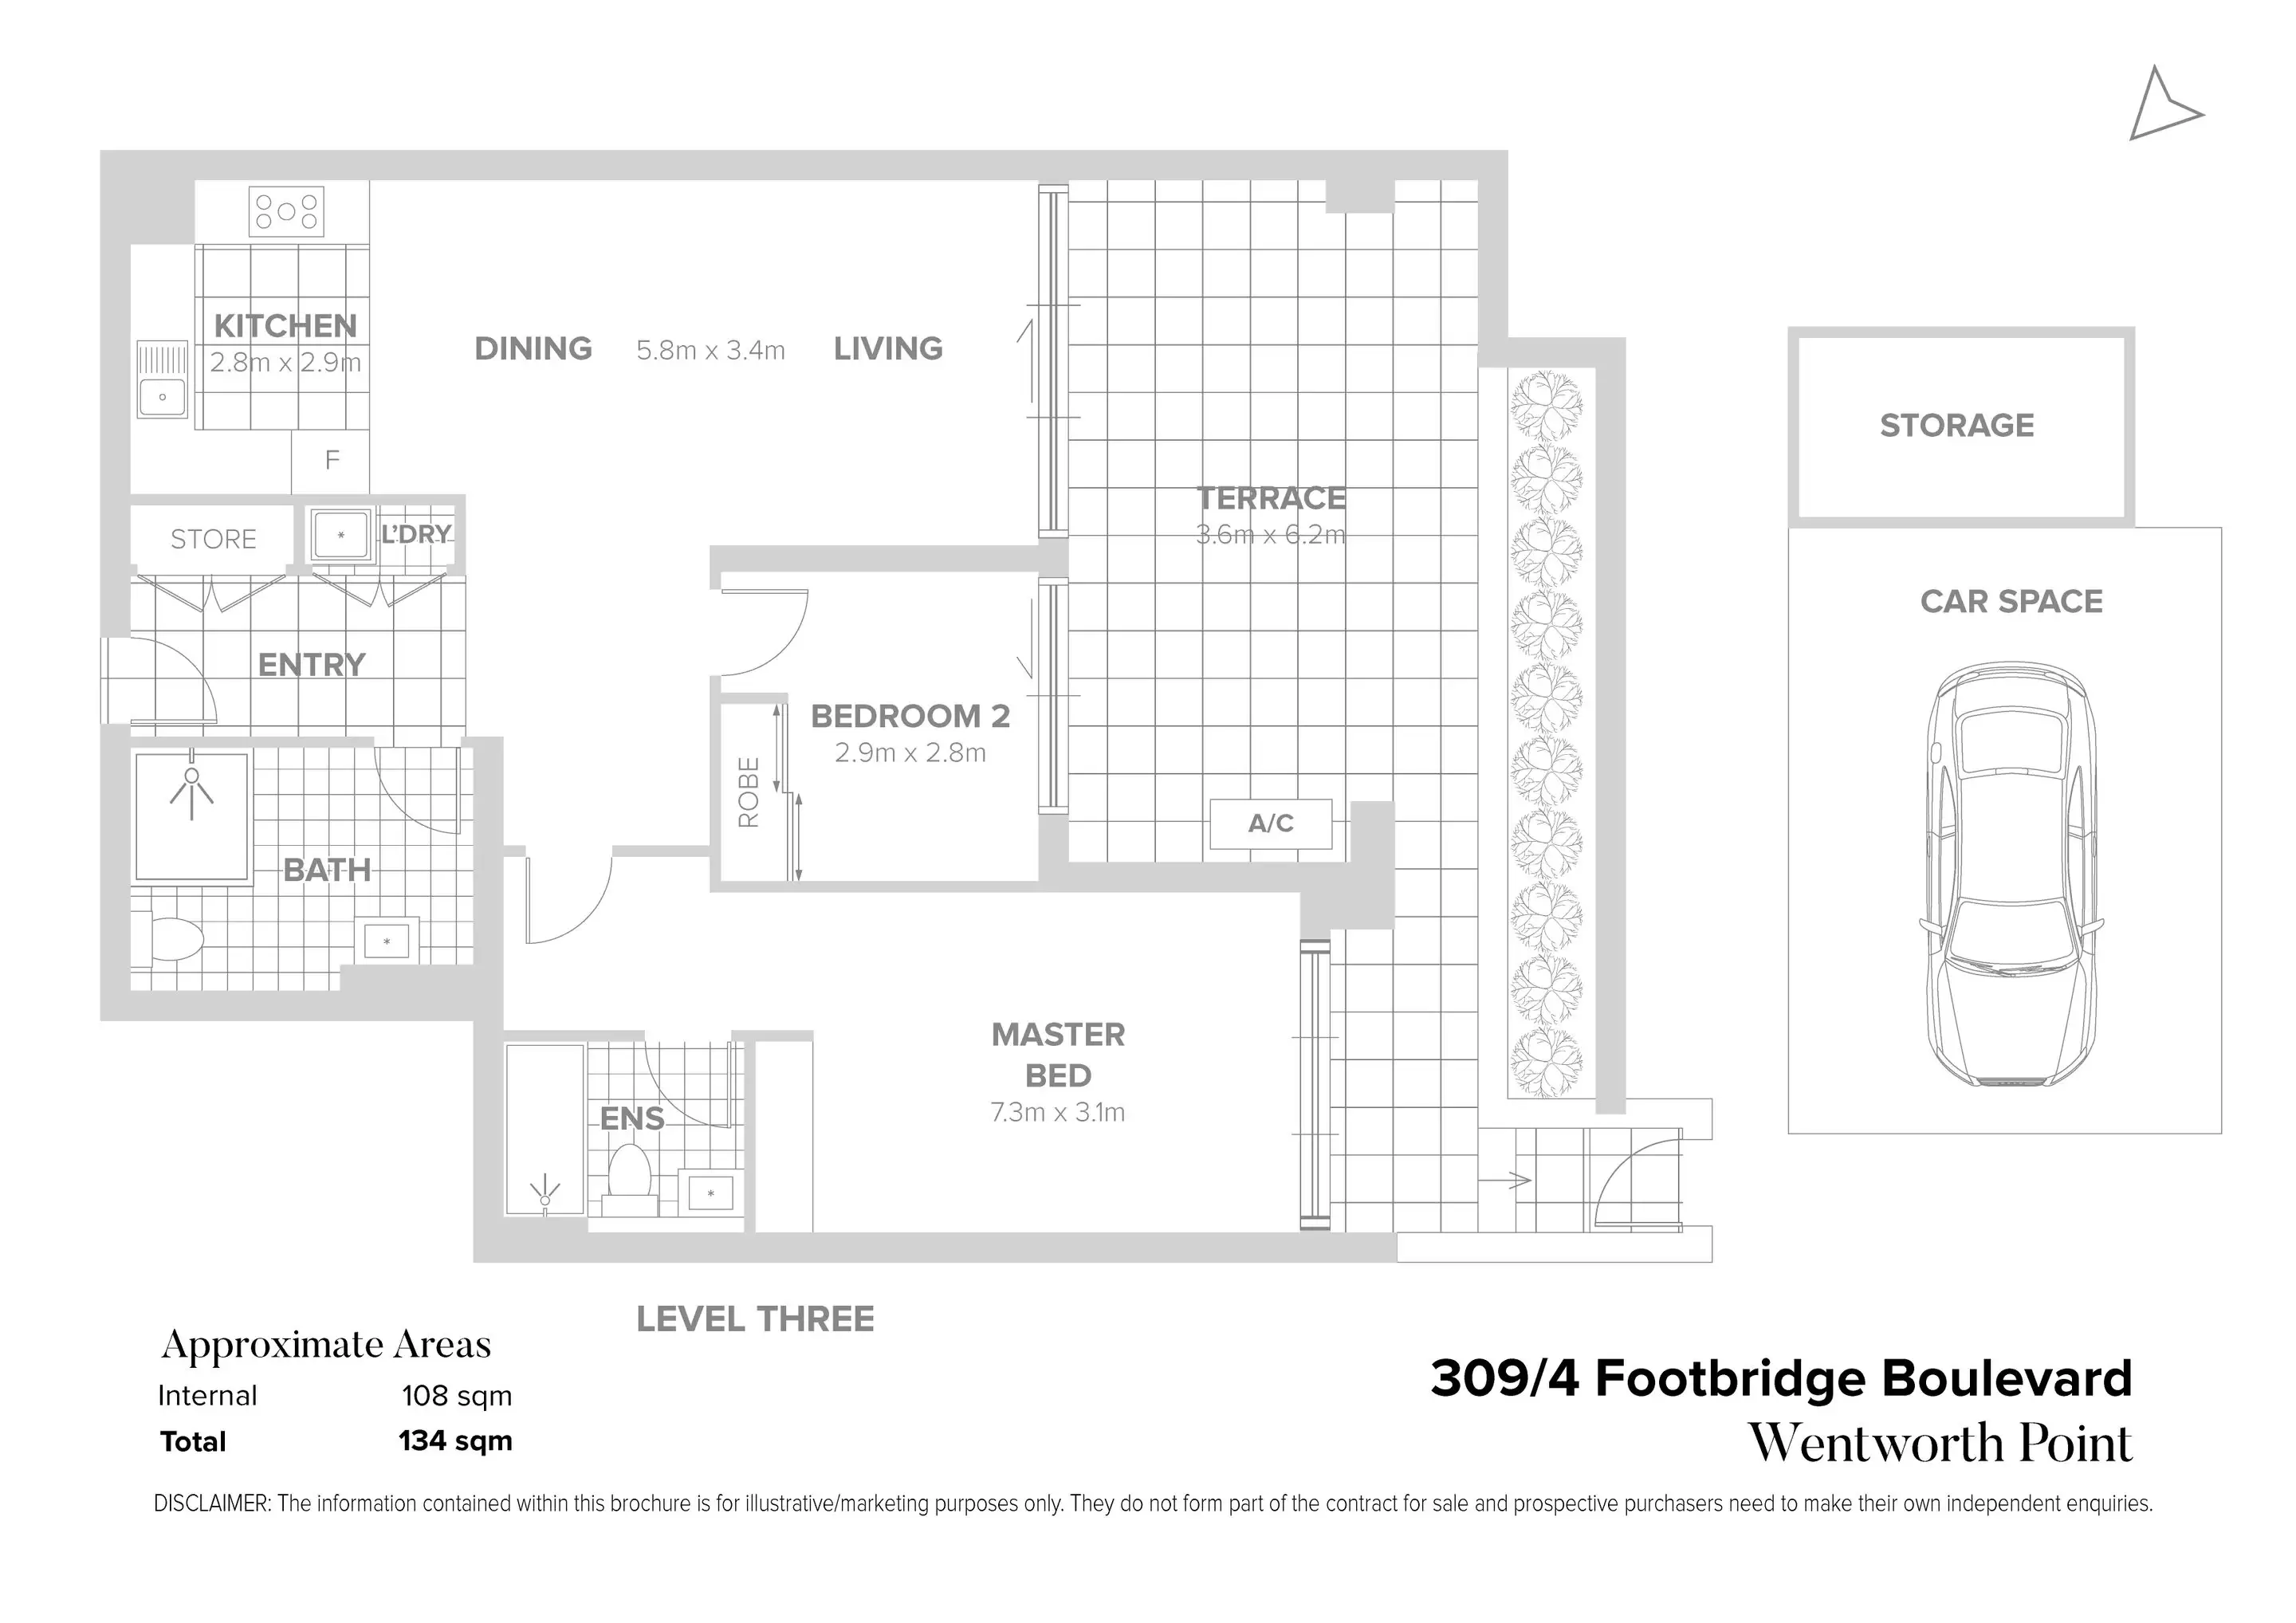 309/4 Footbridge Boulevard, Wentworth Point Sold by Chidiac Realty - floorplan